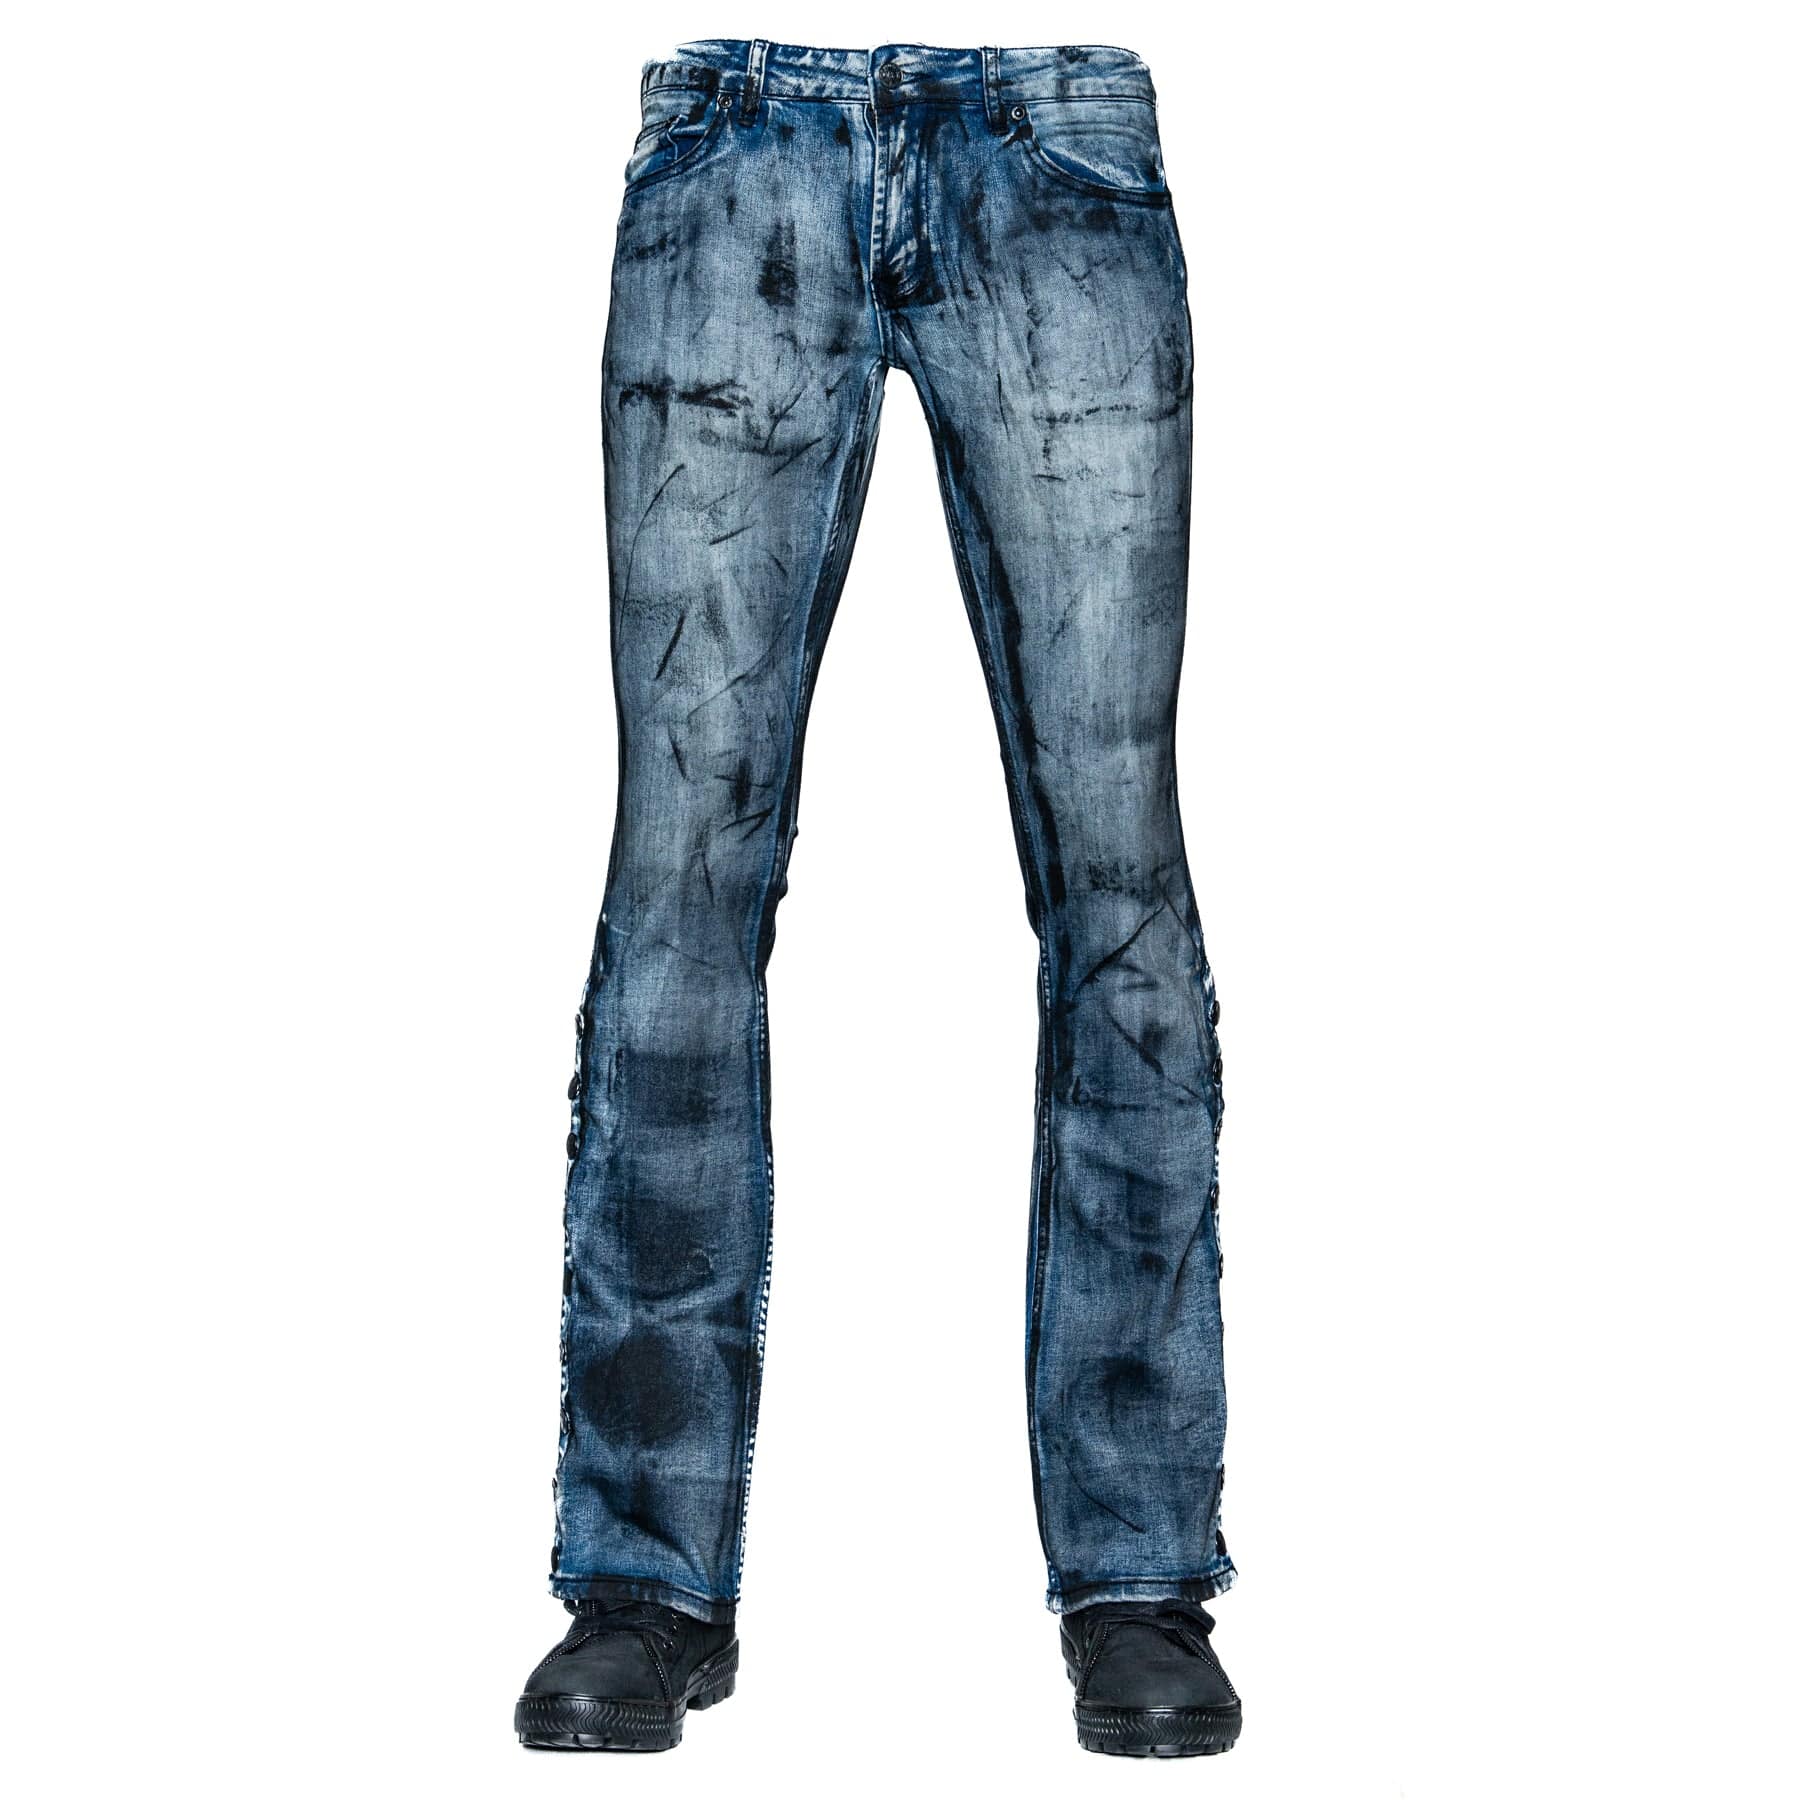 Custom Chop Shop Pants Wornstar Custom Jeans - Black Onyx Alloy Wash - Side Button